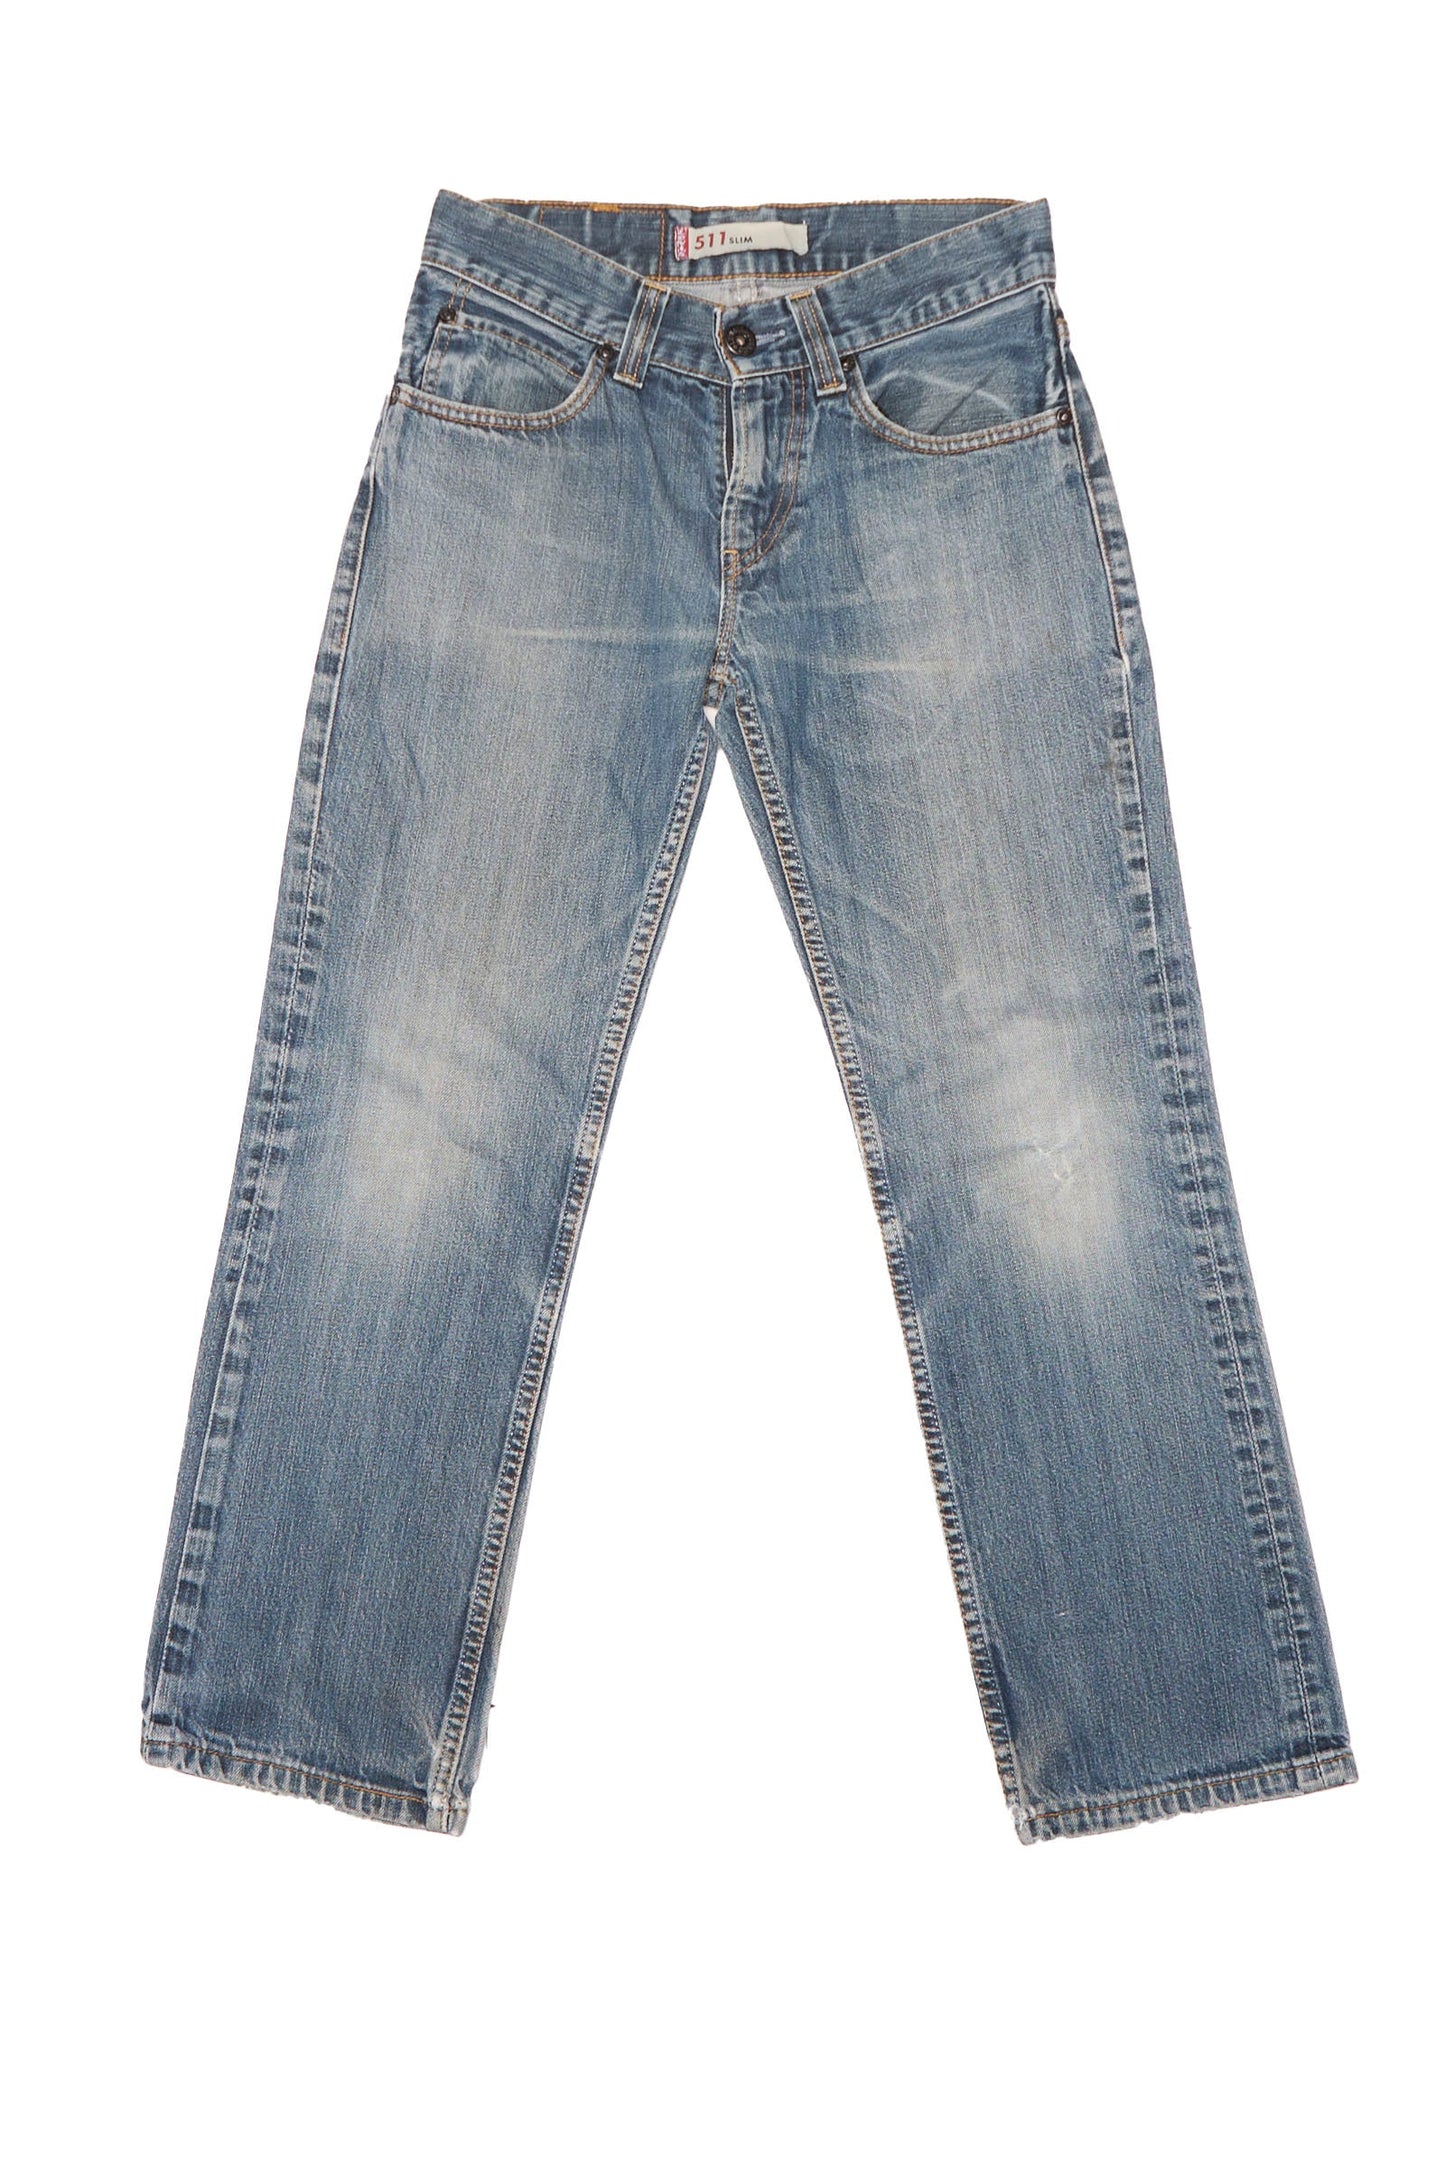 Zip Levis Straight Cut Jeans - W29" L34"